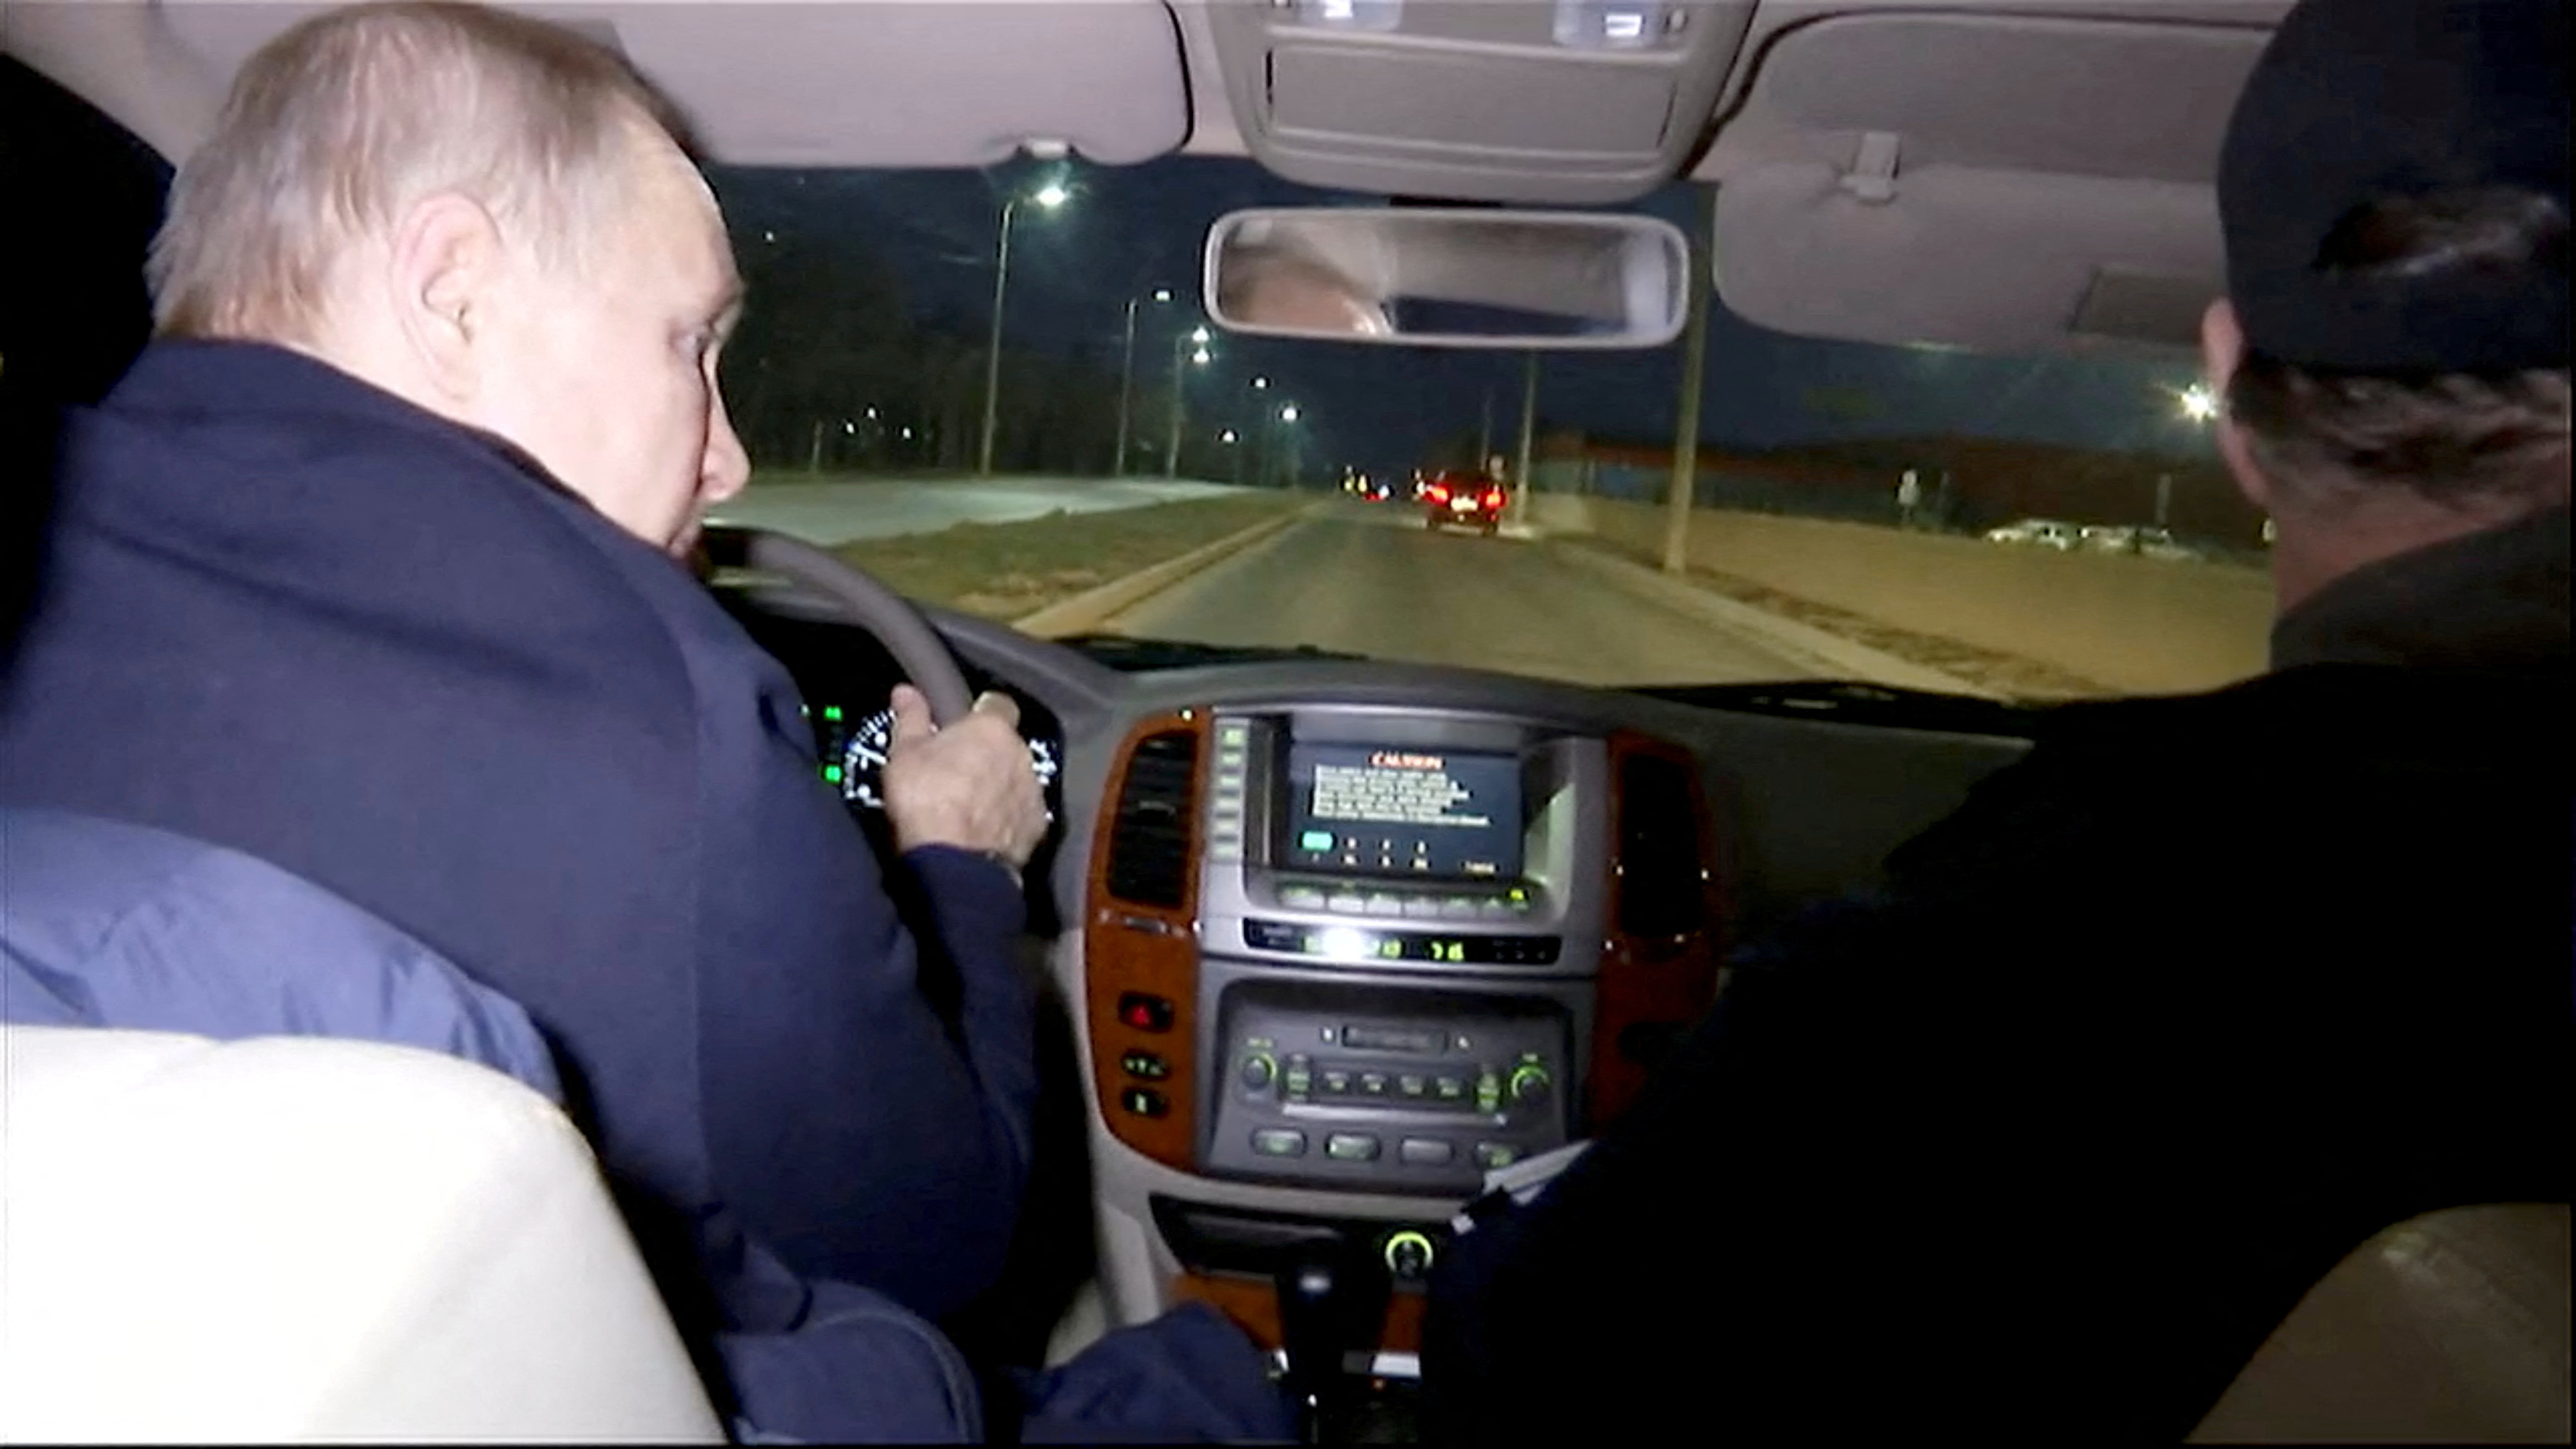 Putin recorrió la ciudad en automóvil, que condujo él mismo (Kremlin.ru/REUTERS)